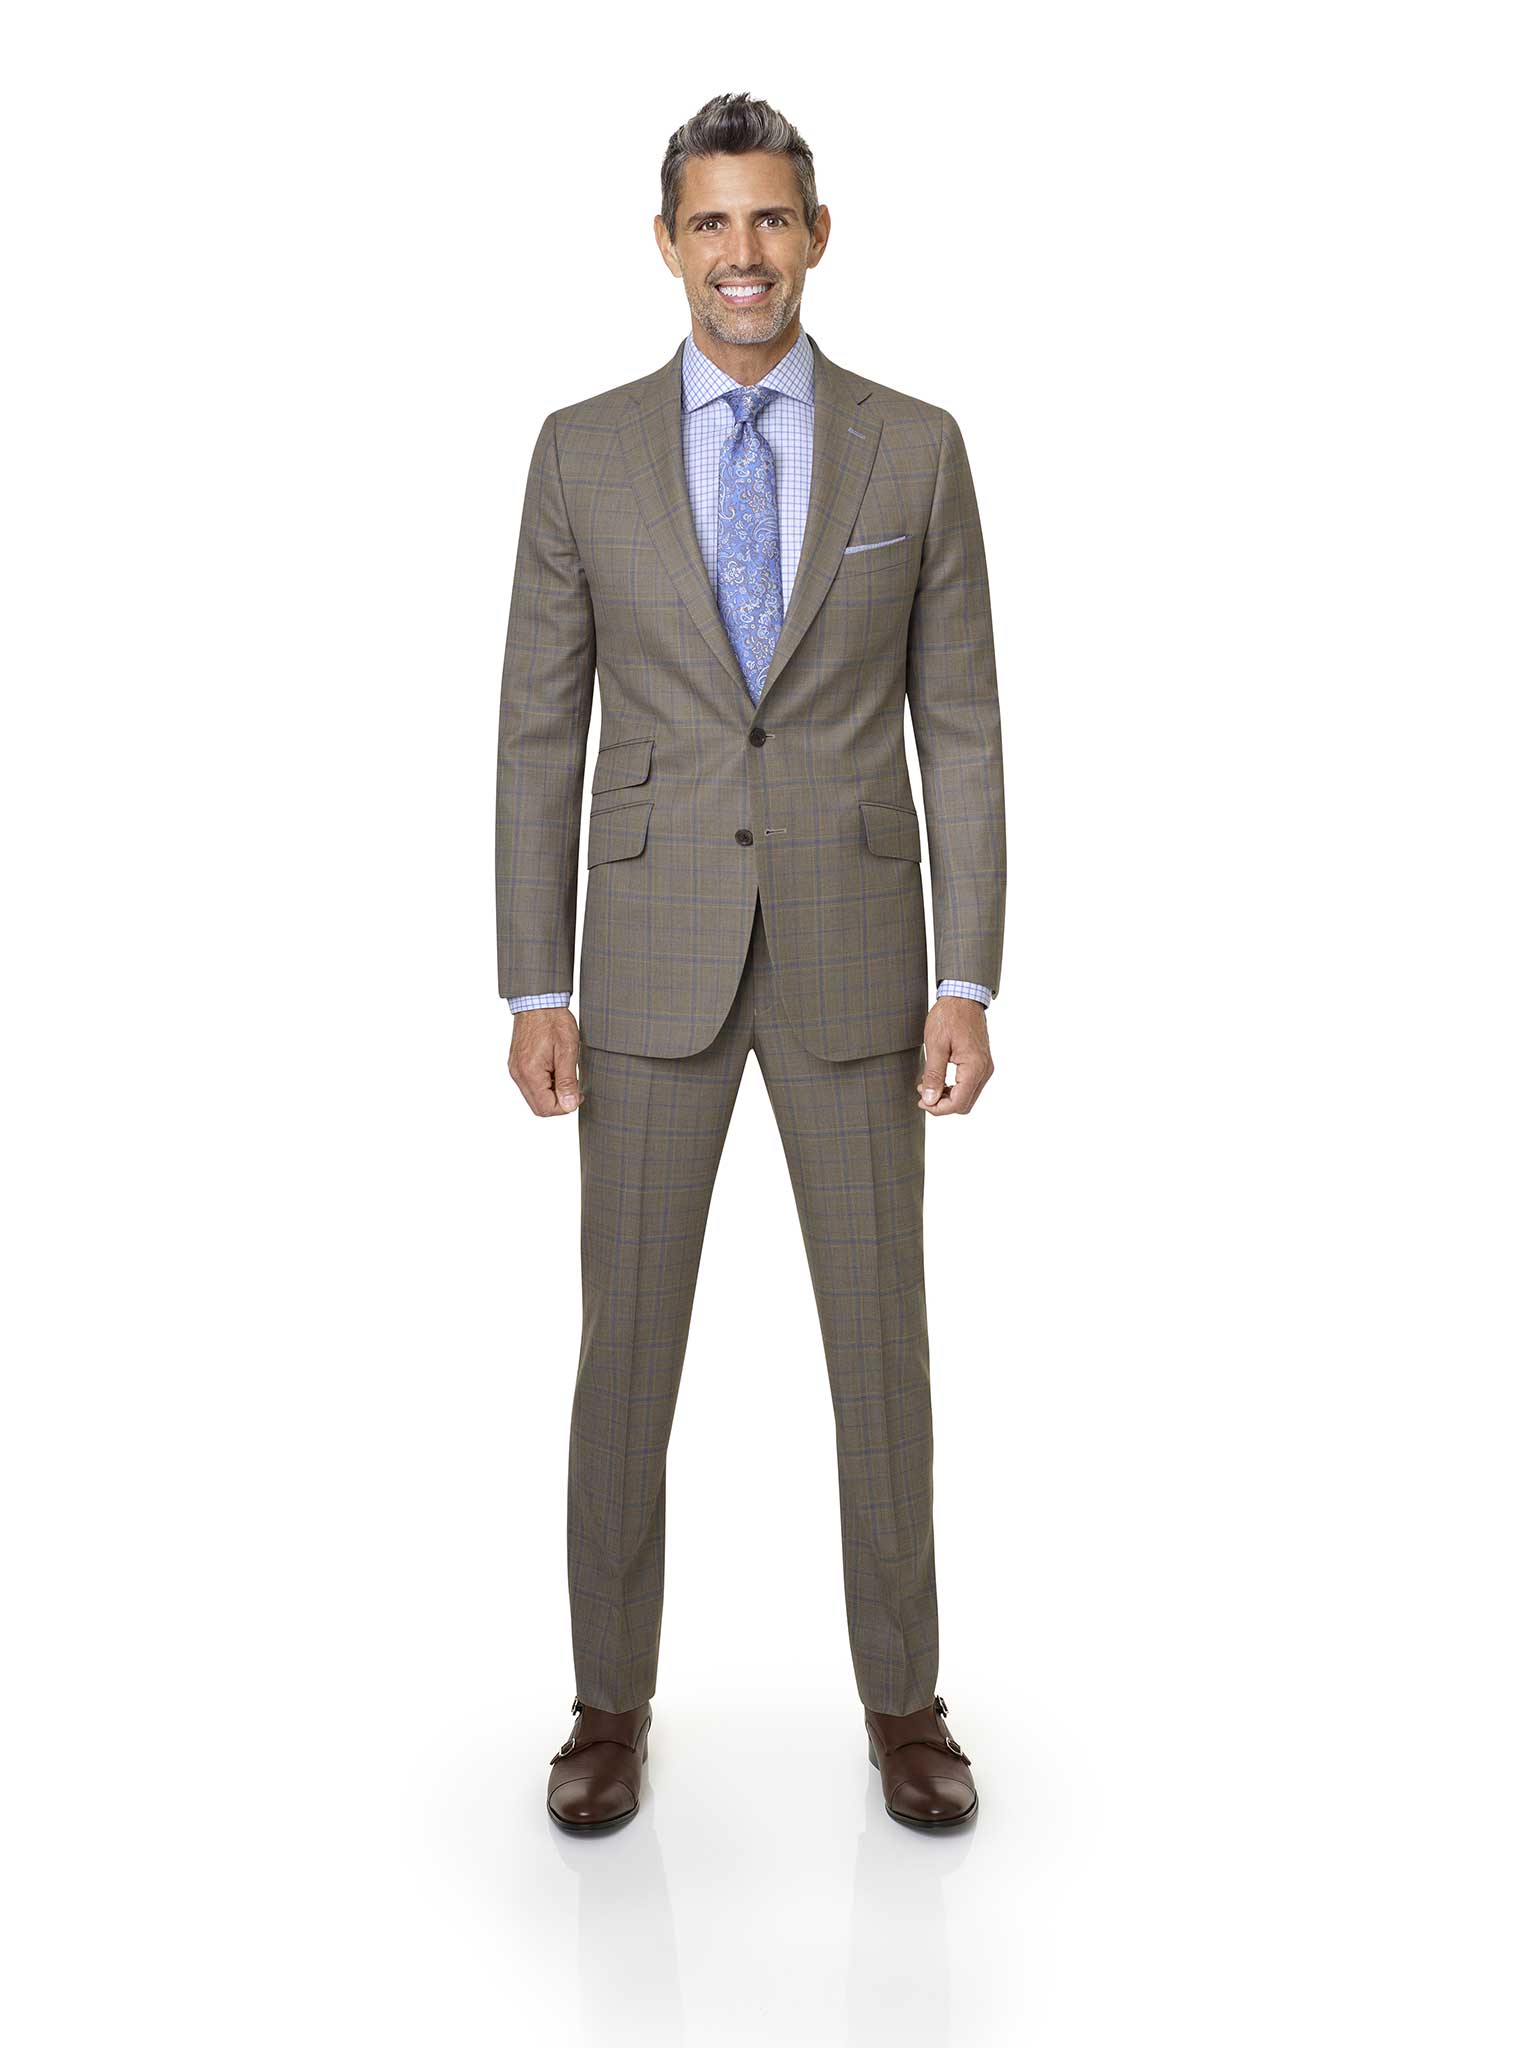 Men's Custom Clothing                                                                                                                                                                                                                                     , Tan Plaid Suit